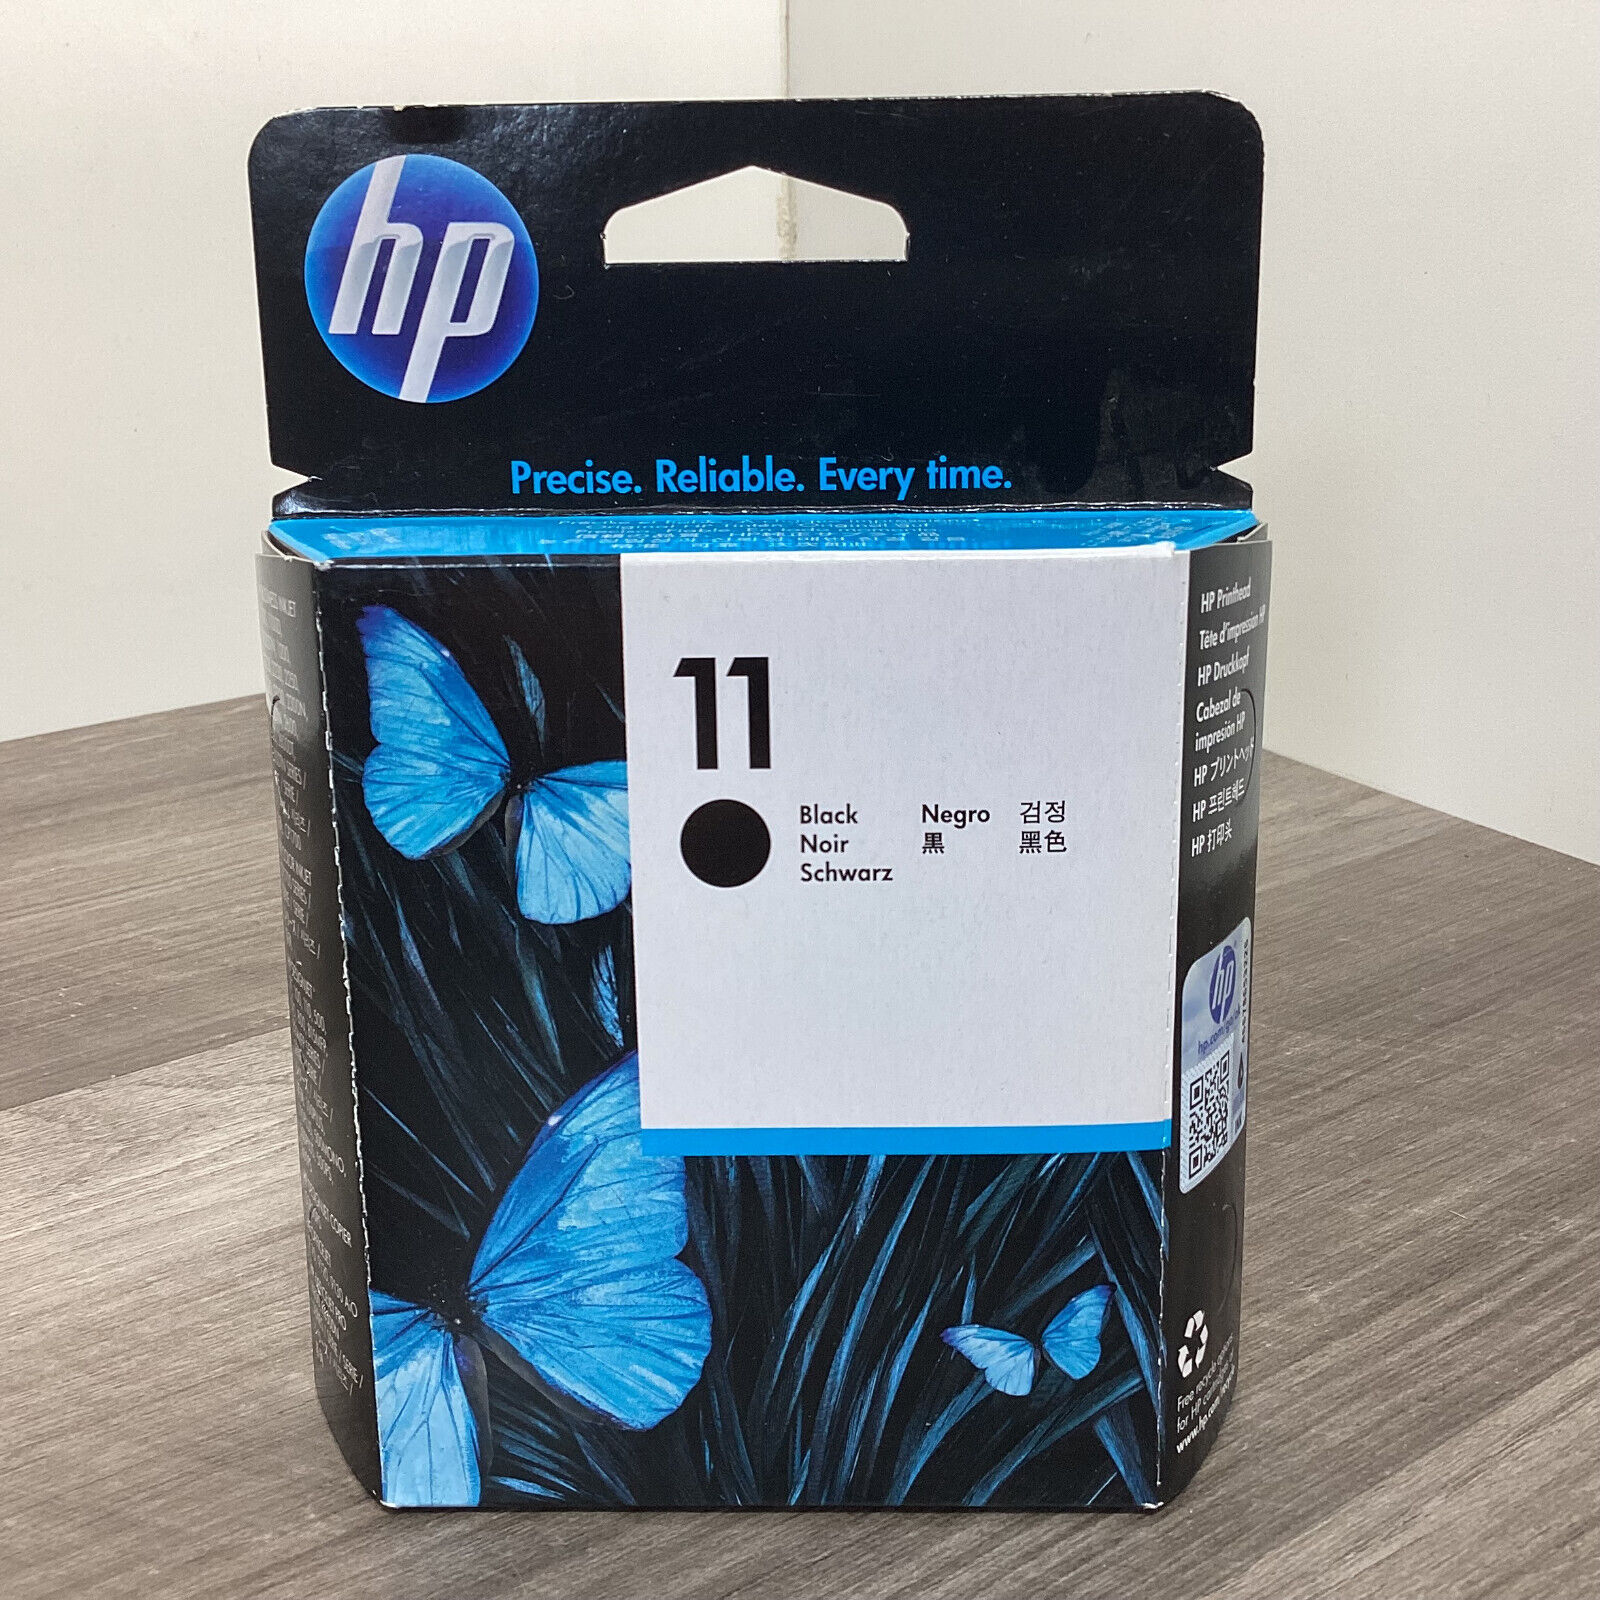 Genuine HP 11 Printhead Black C4810A - New / Sealed Box / Exp 08/2018 / Nice